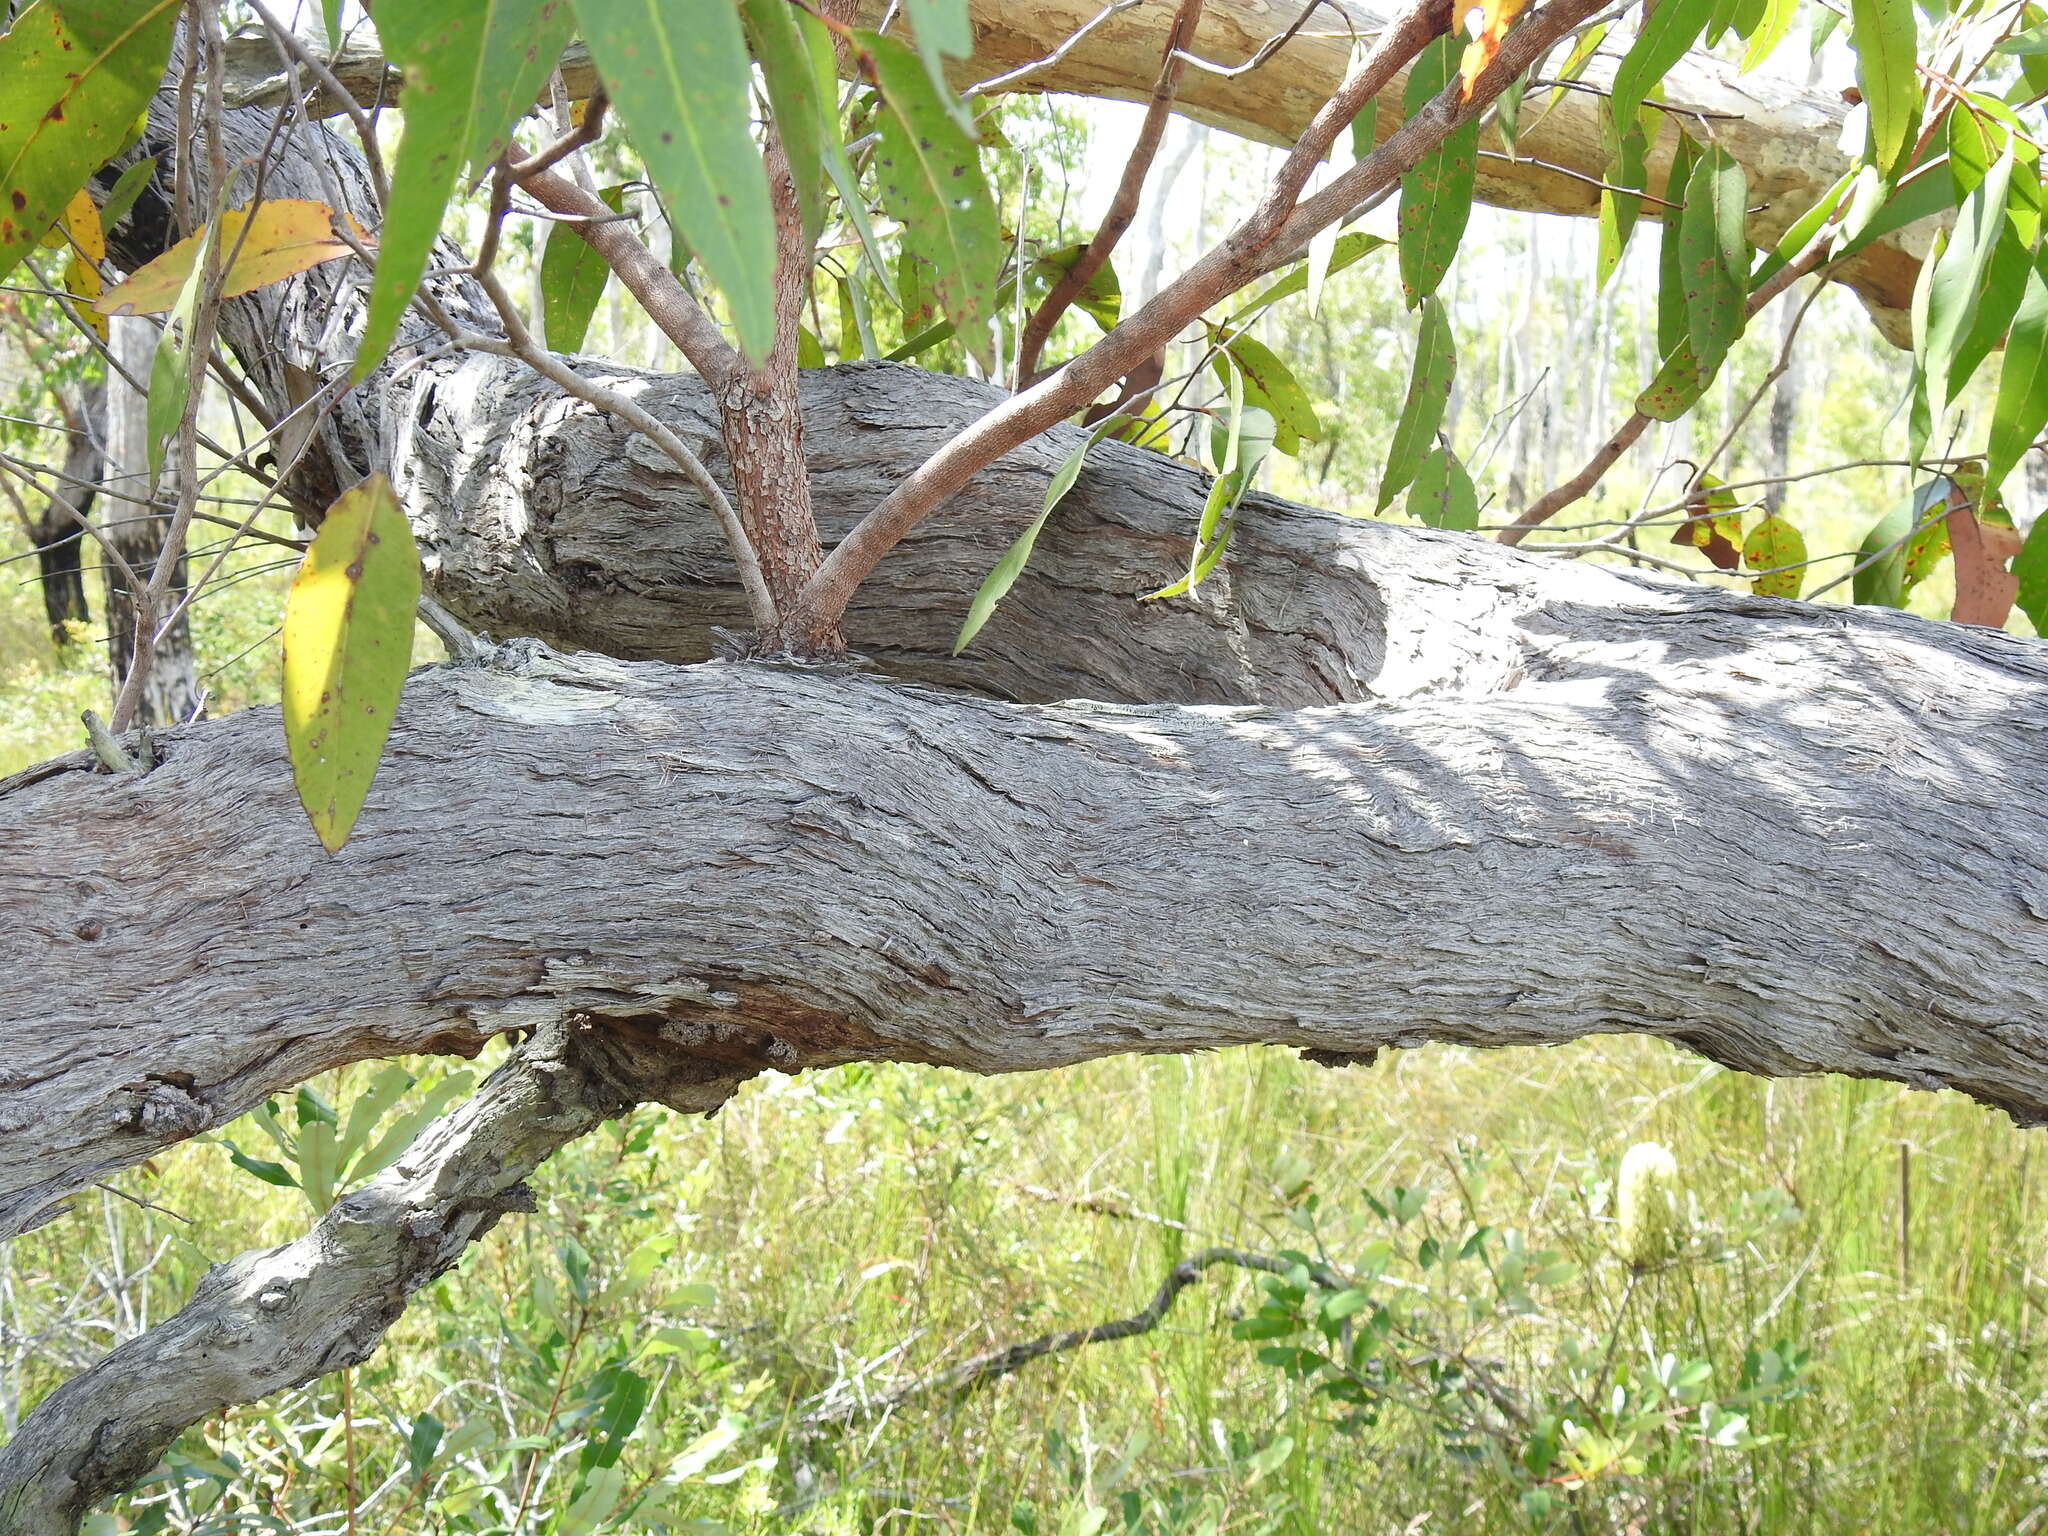 Image of Eucalyptus latisinensis K. D. Hill